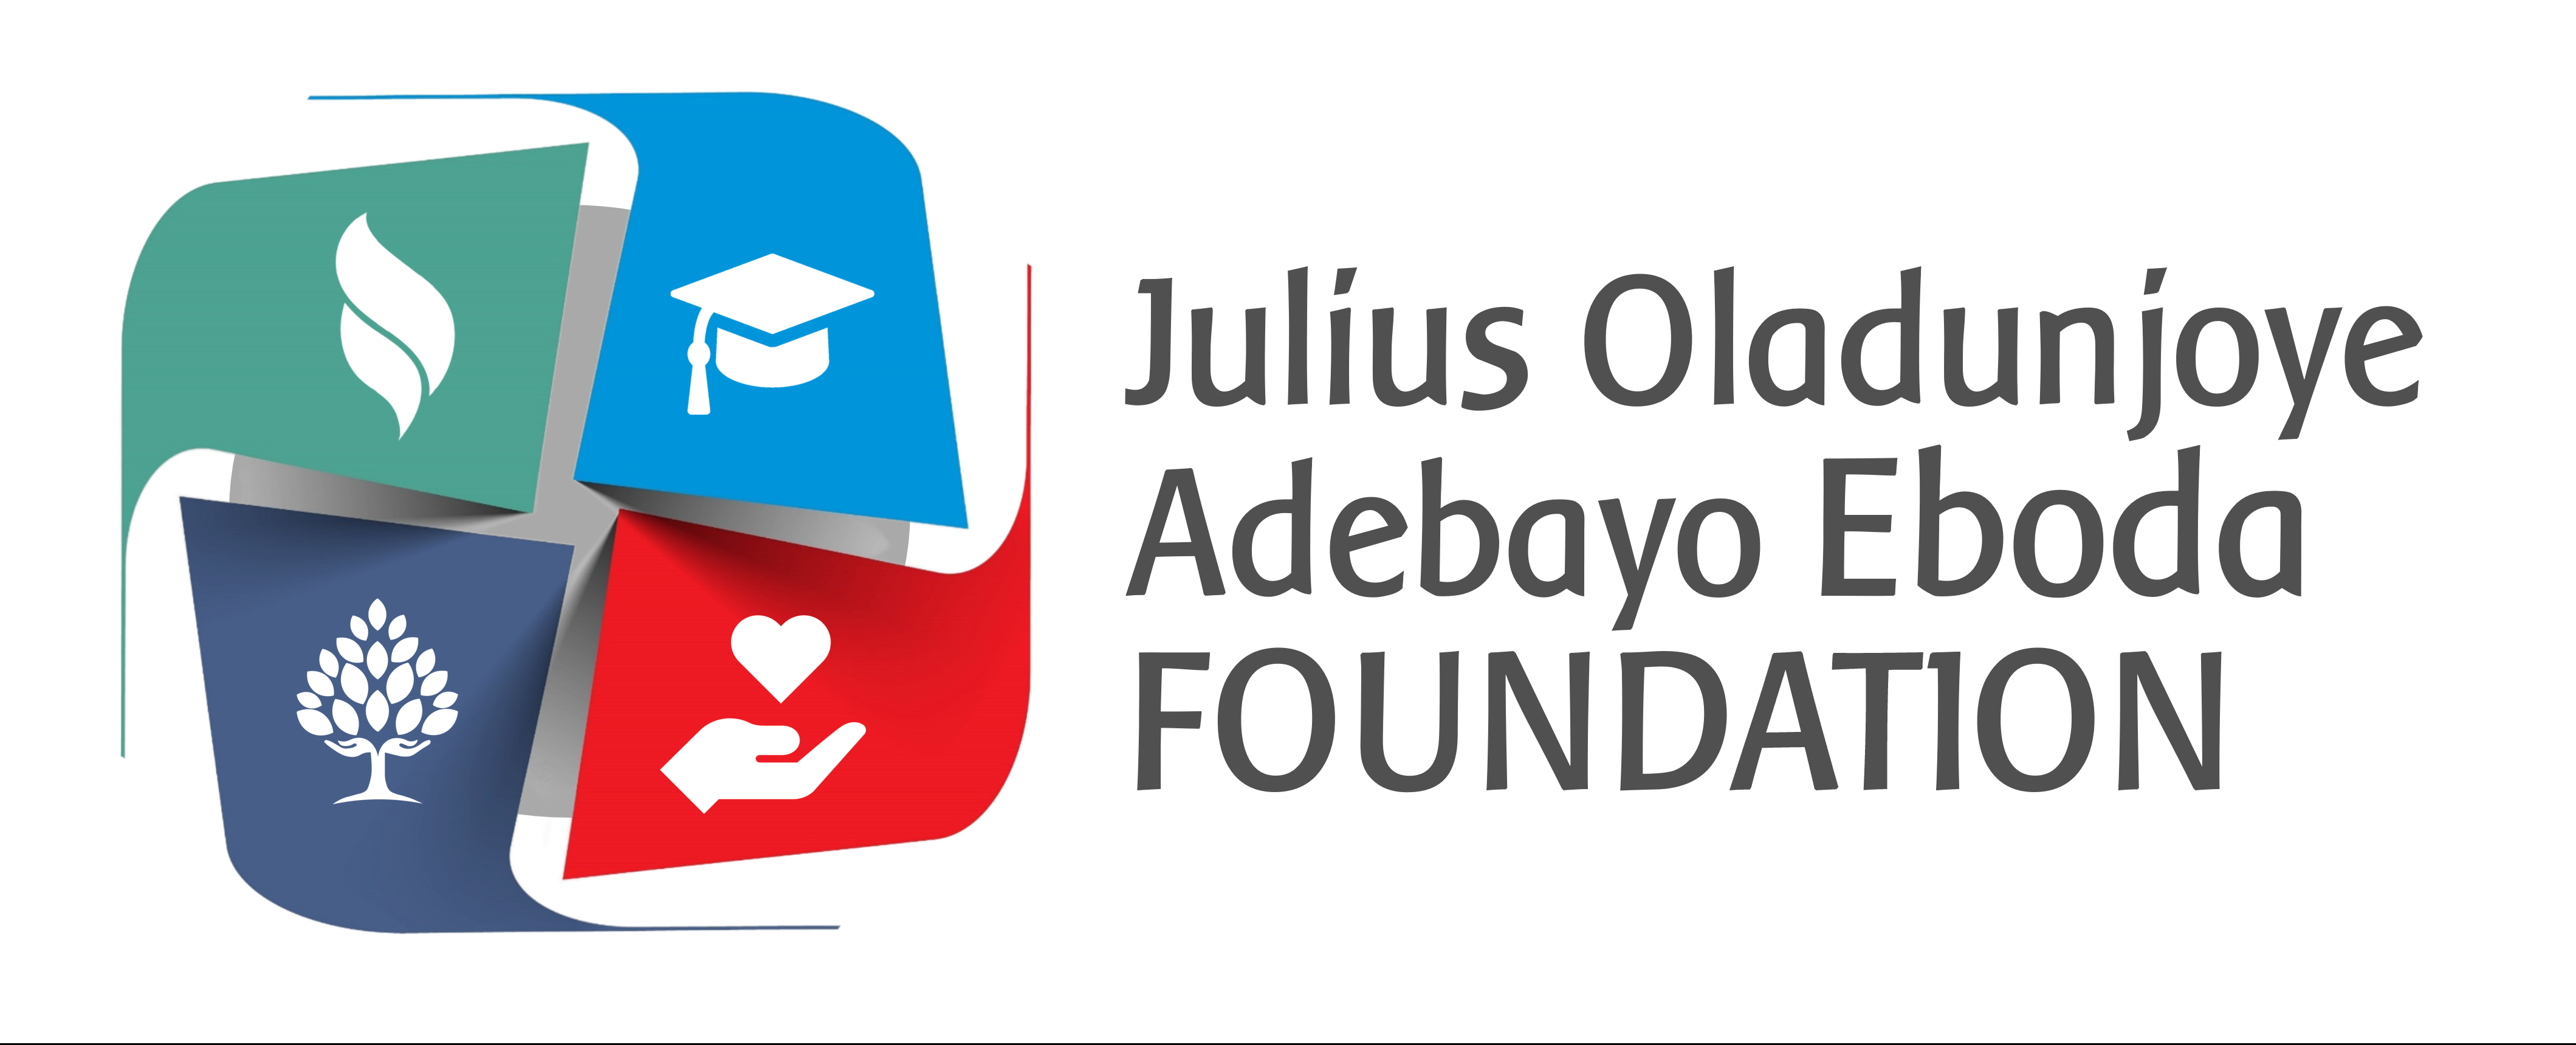 J O A E F | Julius Oladunjoye Adebayo Eboda Foundation